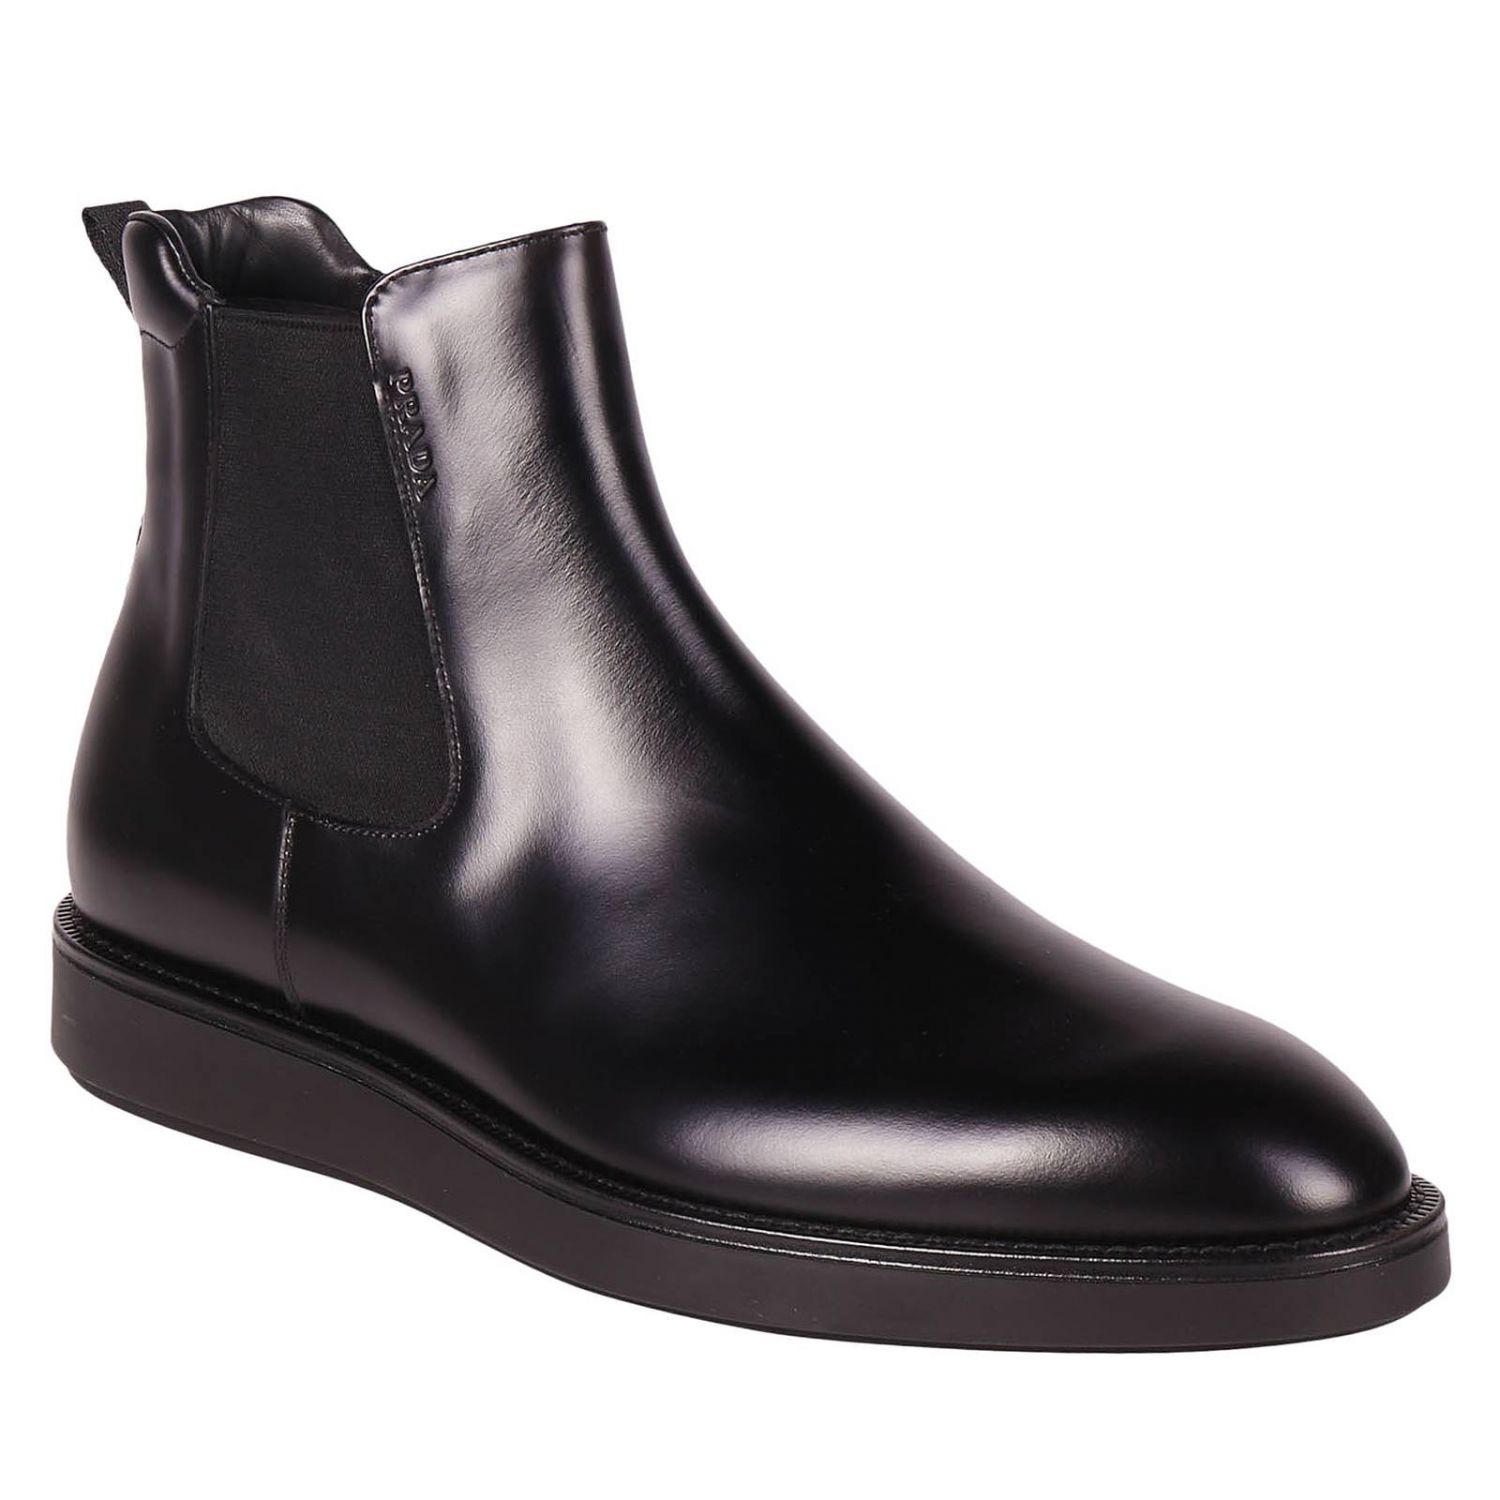 PRADA: Boots men | Boots Prada Men Black | Boots Prada 2TE119 B4L Giglio UK